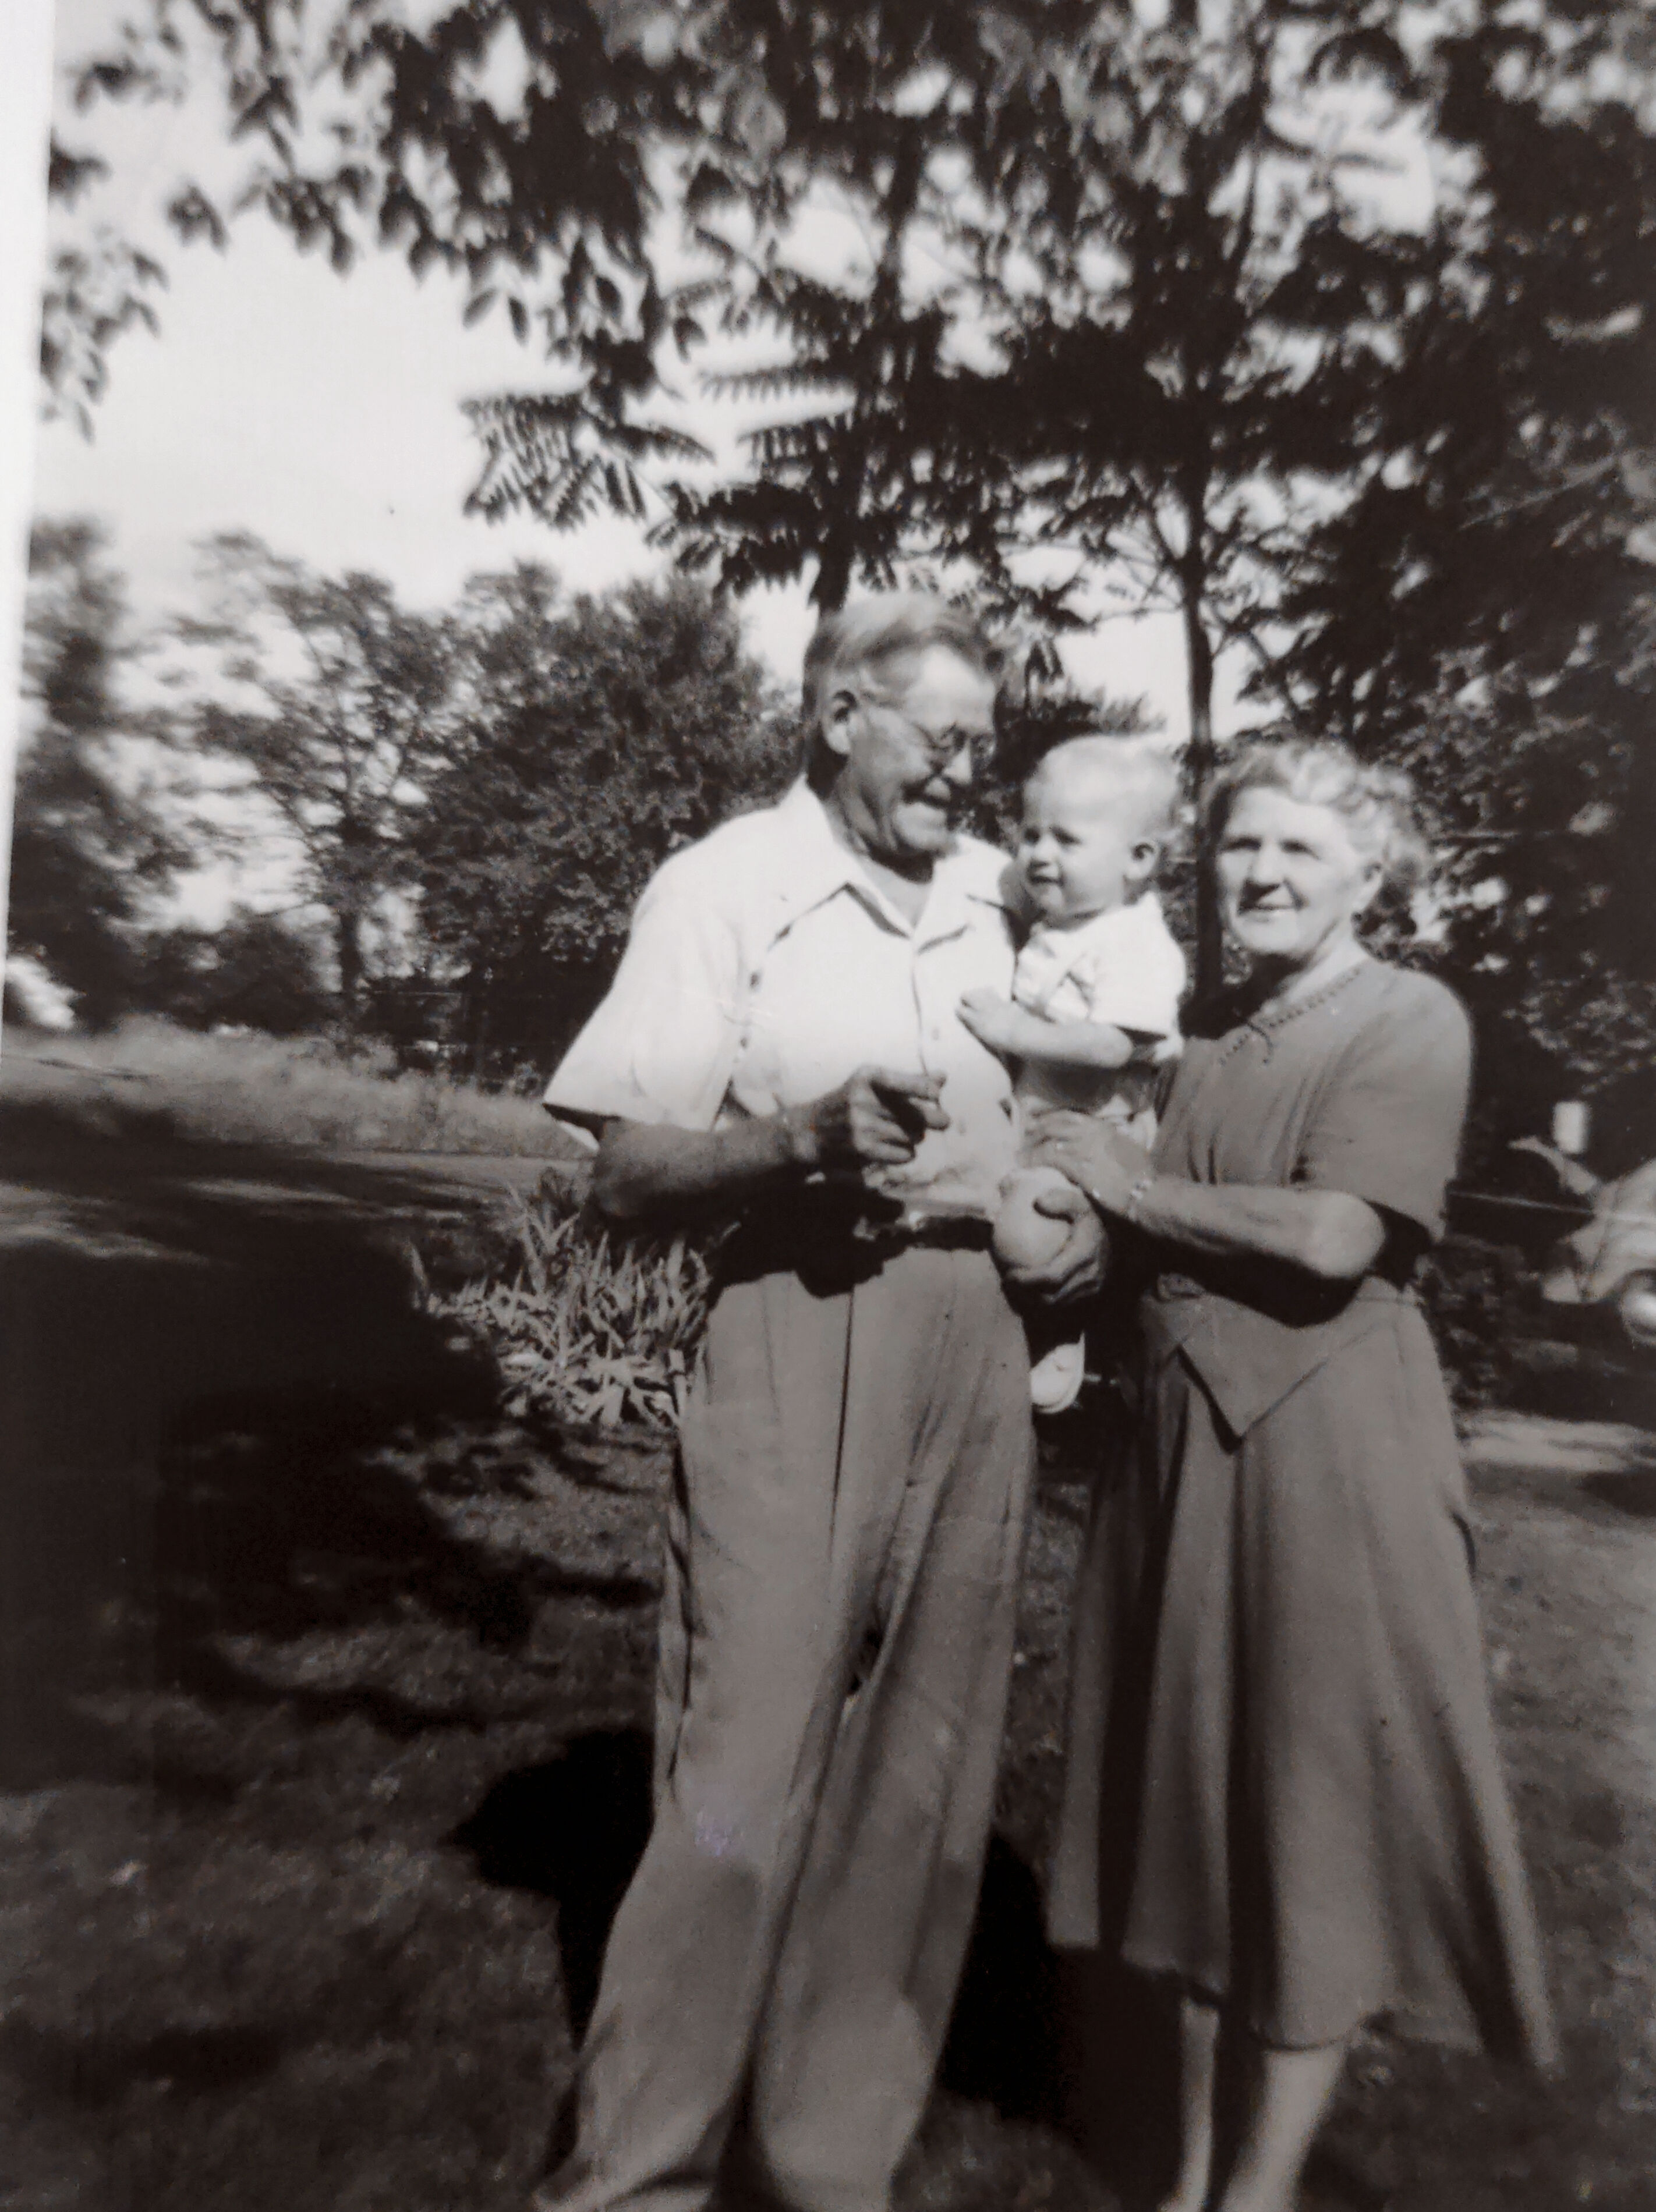 Grandpa and Grandma Engstrom
September 2, 1951